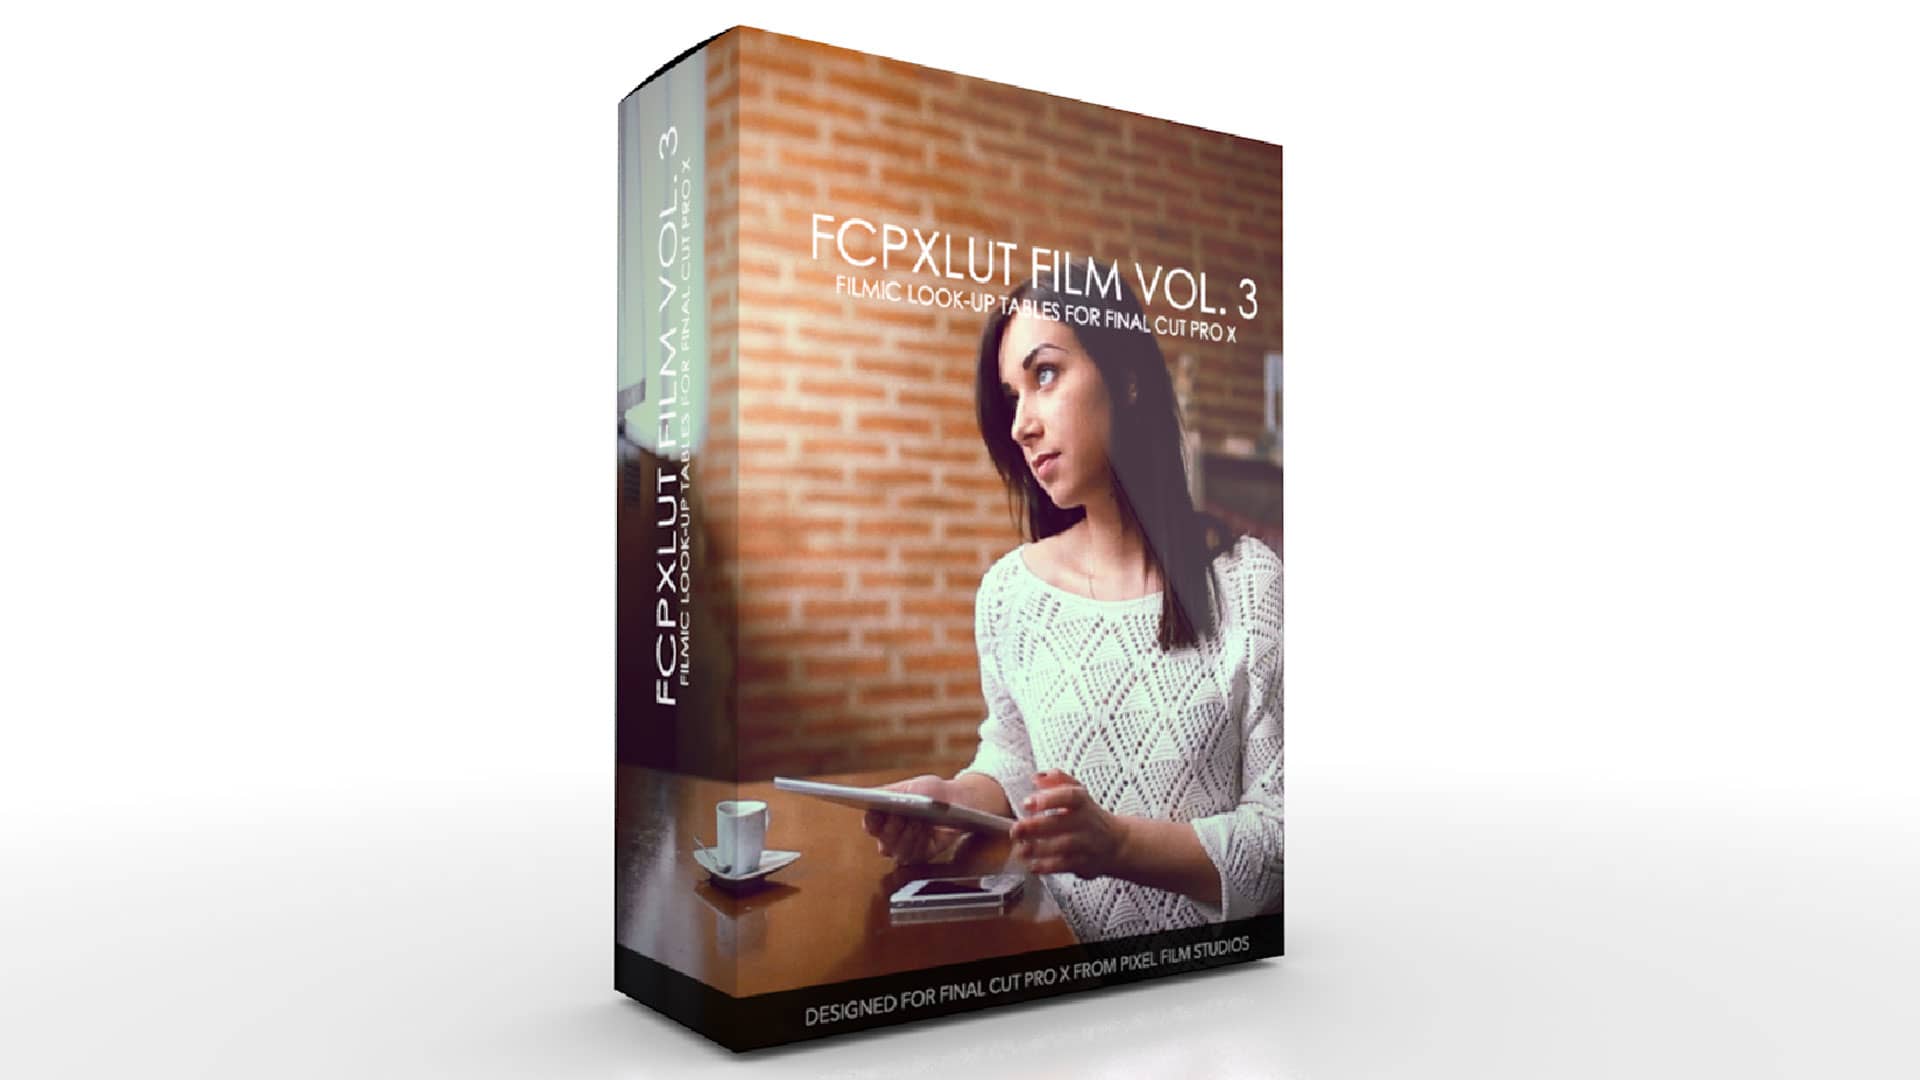 Pixel Film Studios TransFlare download free